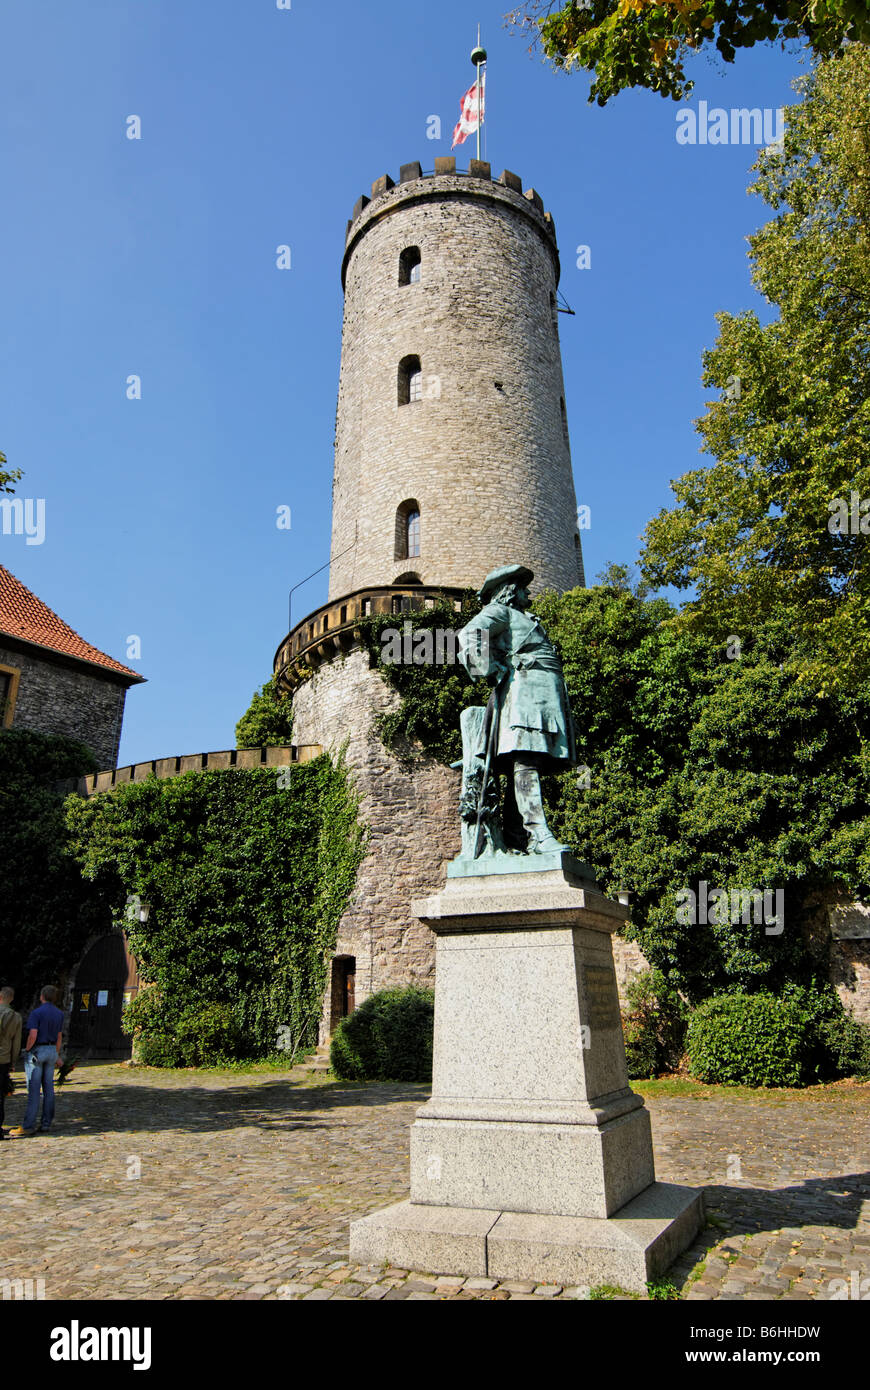 Statue of the Kurfuerst Friedrich Wilhelm near the tower of in Bielefeld city Germany Stock Photo